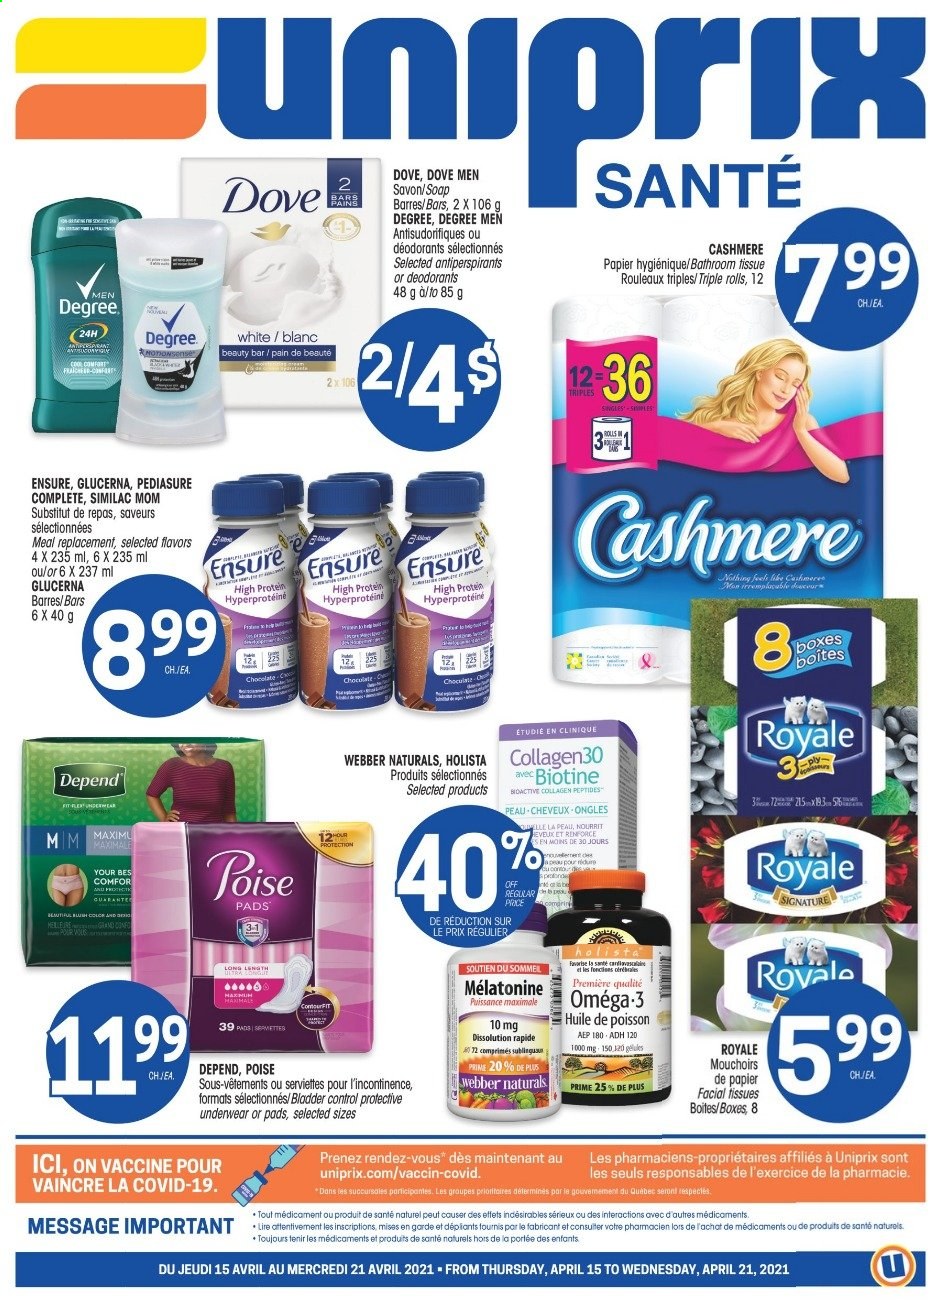 thumbnail - Uniprix Santé Flyer - April 15, 2021 - April 21, 2021 - Sales products - Similac, bath tissue, soap, Clinique, facial tissues, Omega-3, Glucerna, deodorant. Page 1.